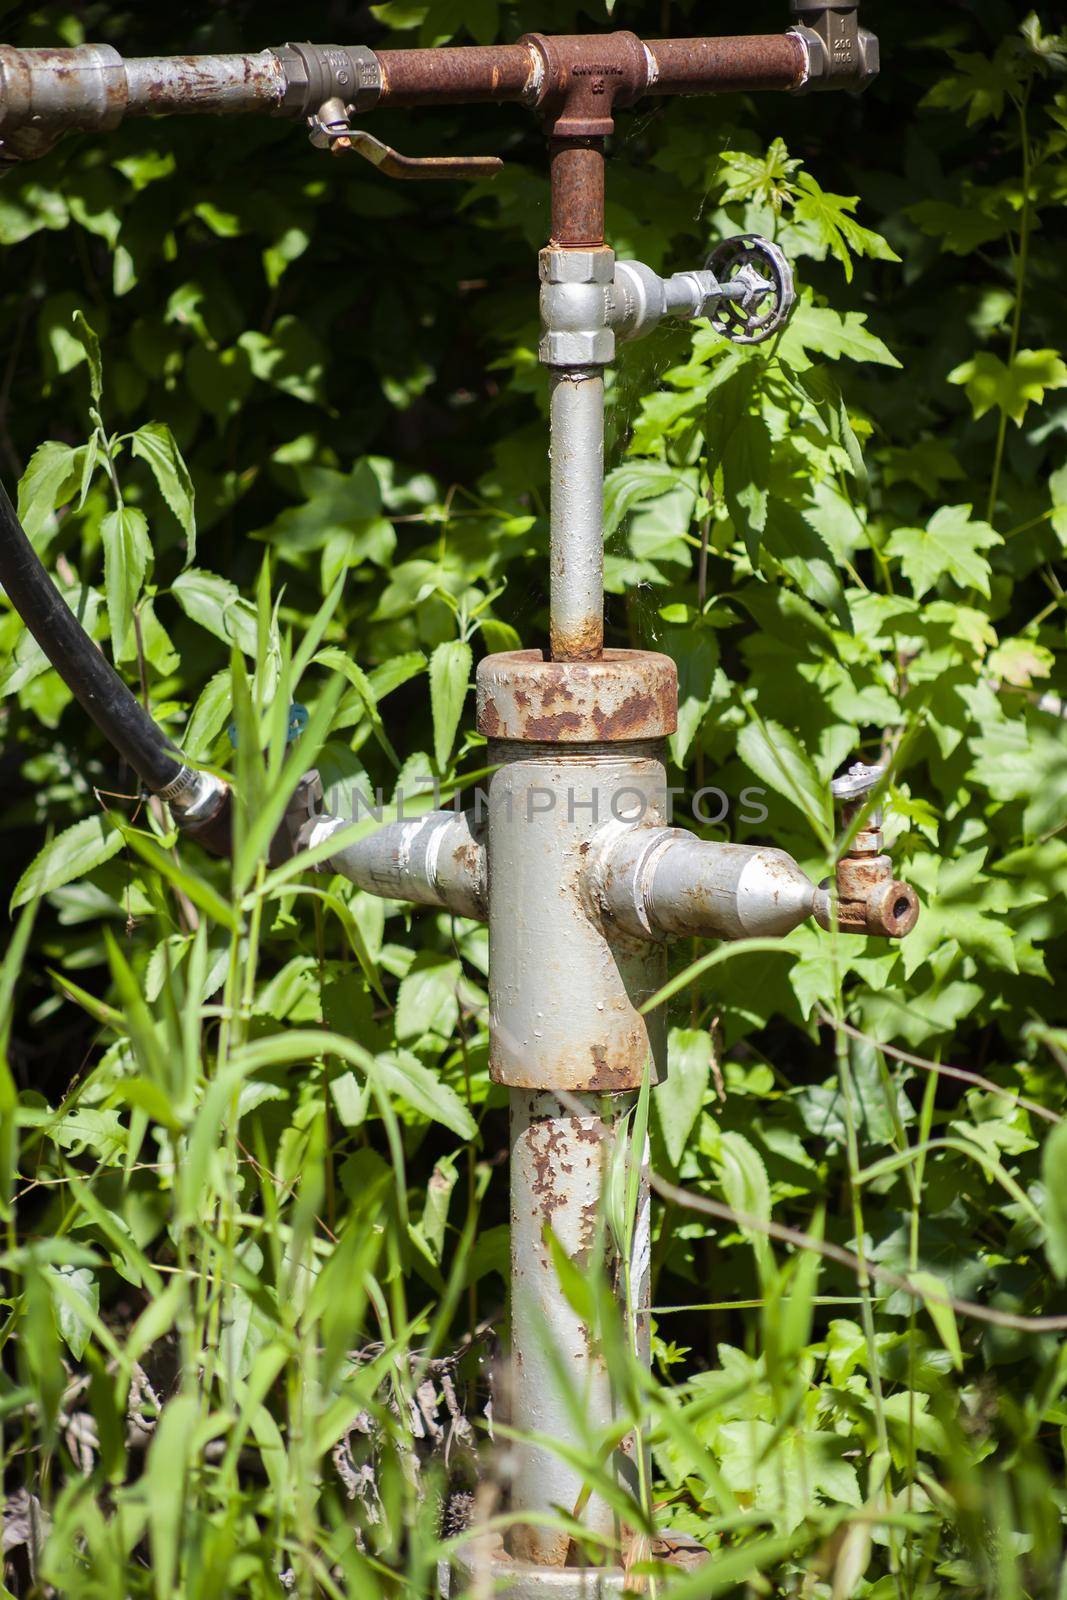 Metal water spigot located in deep green foliage